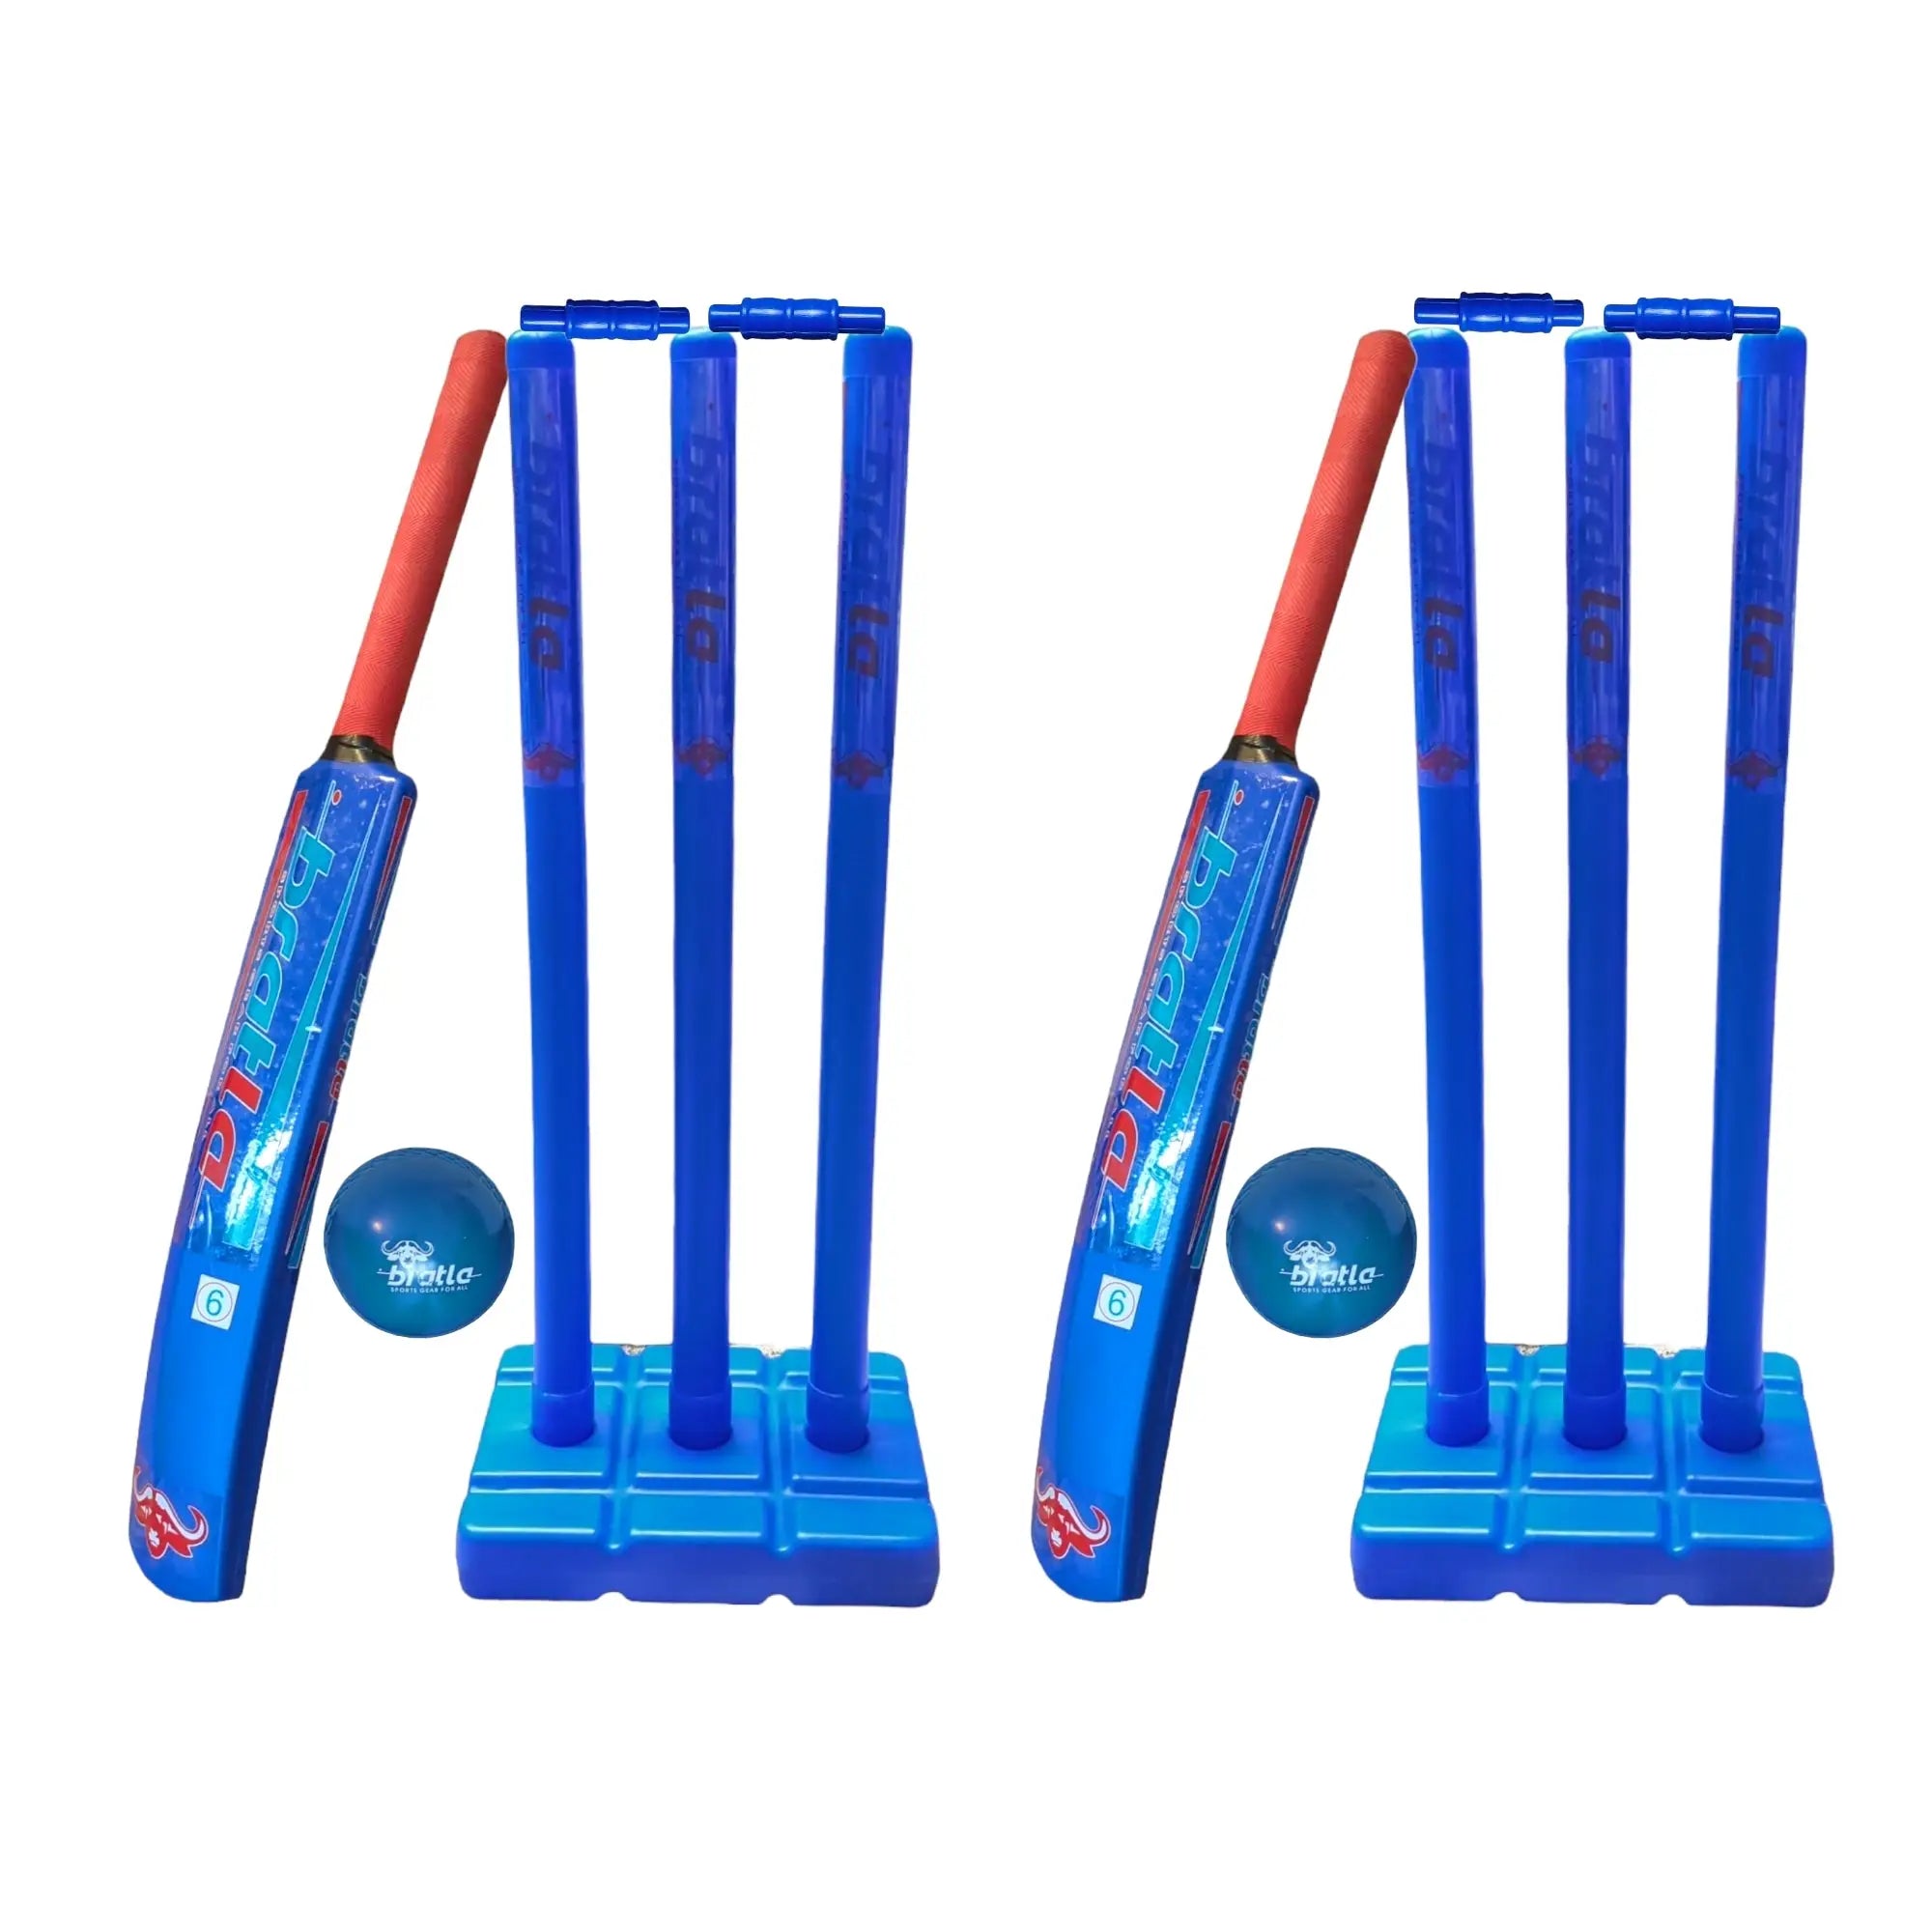 Bratla Cricket Plastic Beach Set Double Bat Balls Stumps and Bag Blue - Size 4 (9-10 Years Old) - BATS - CRICKET SETS